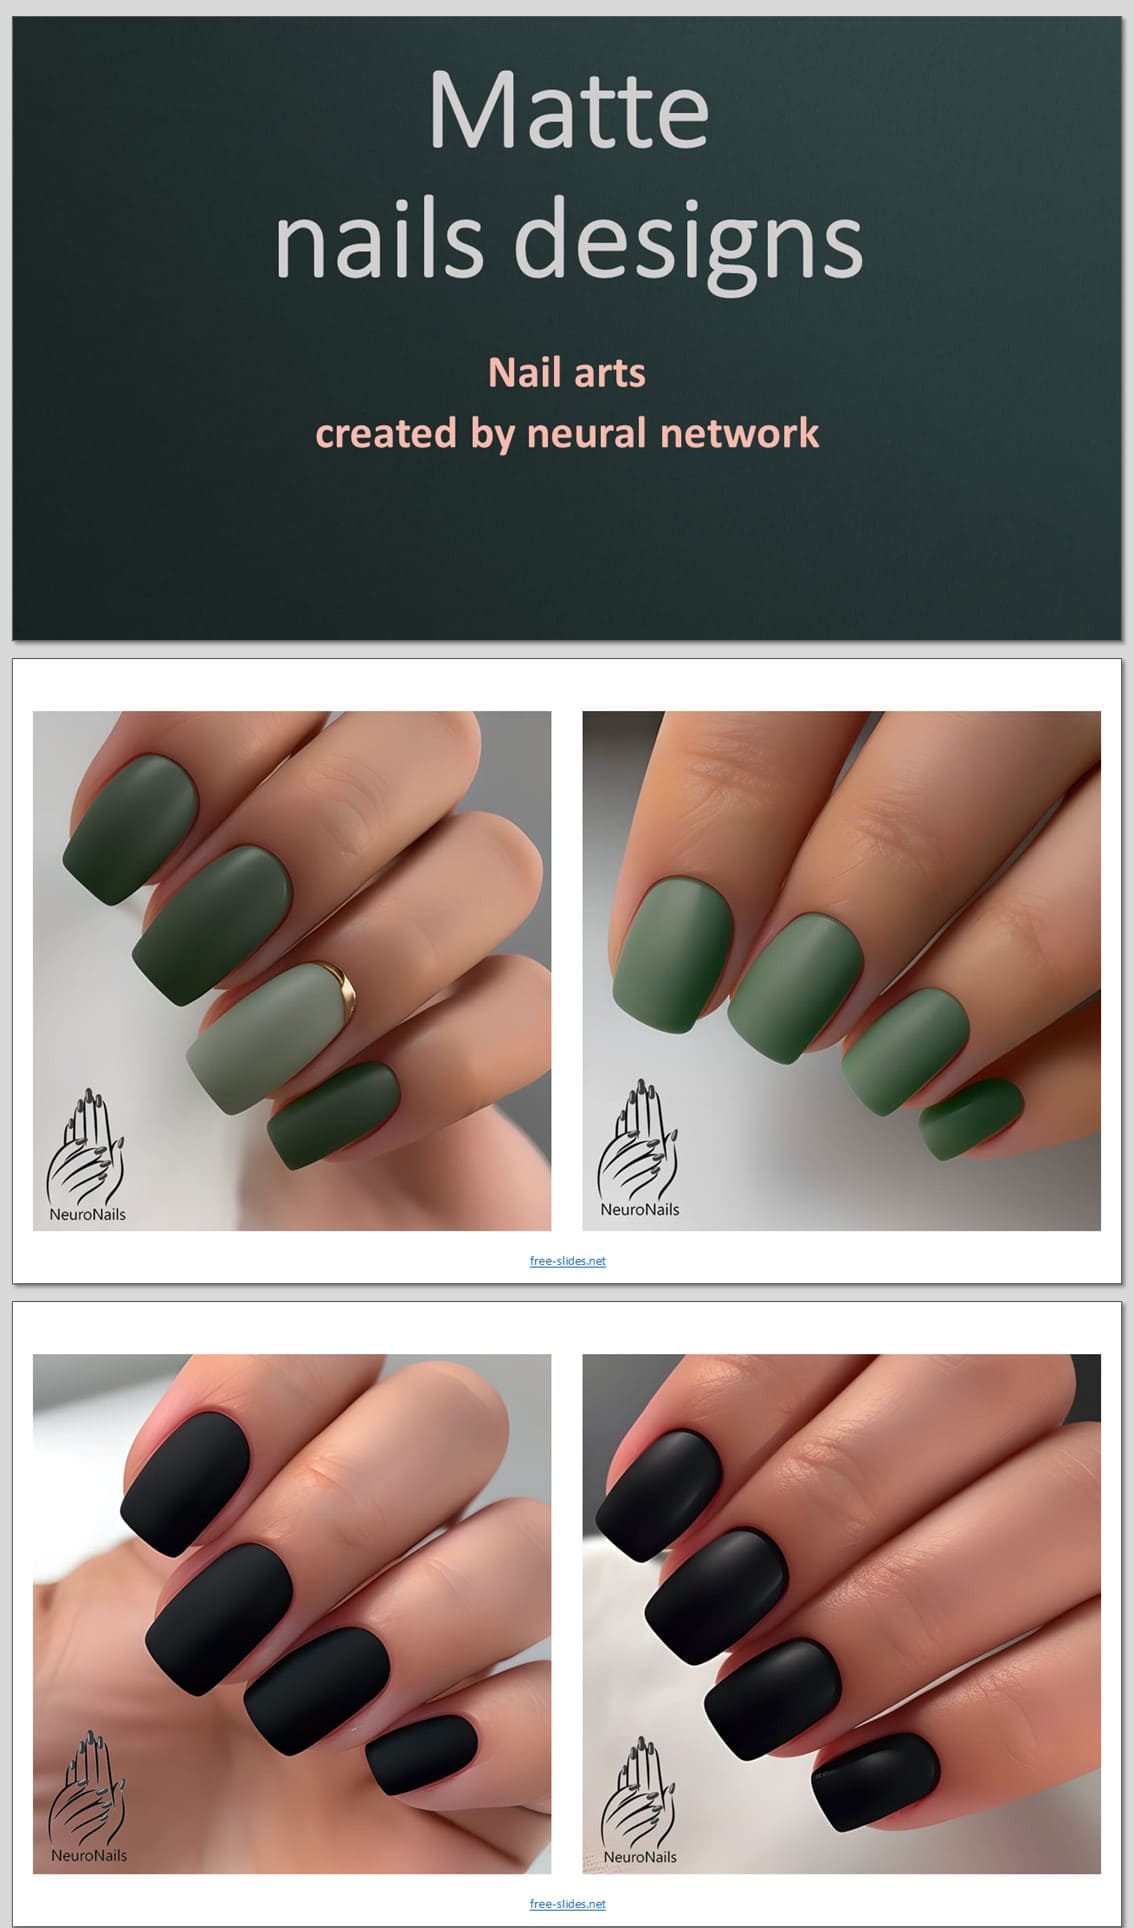 Matte network creates fall nails designs